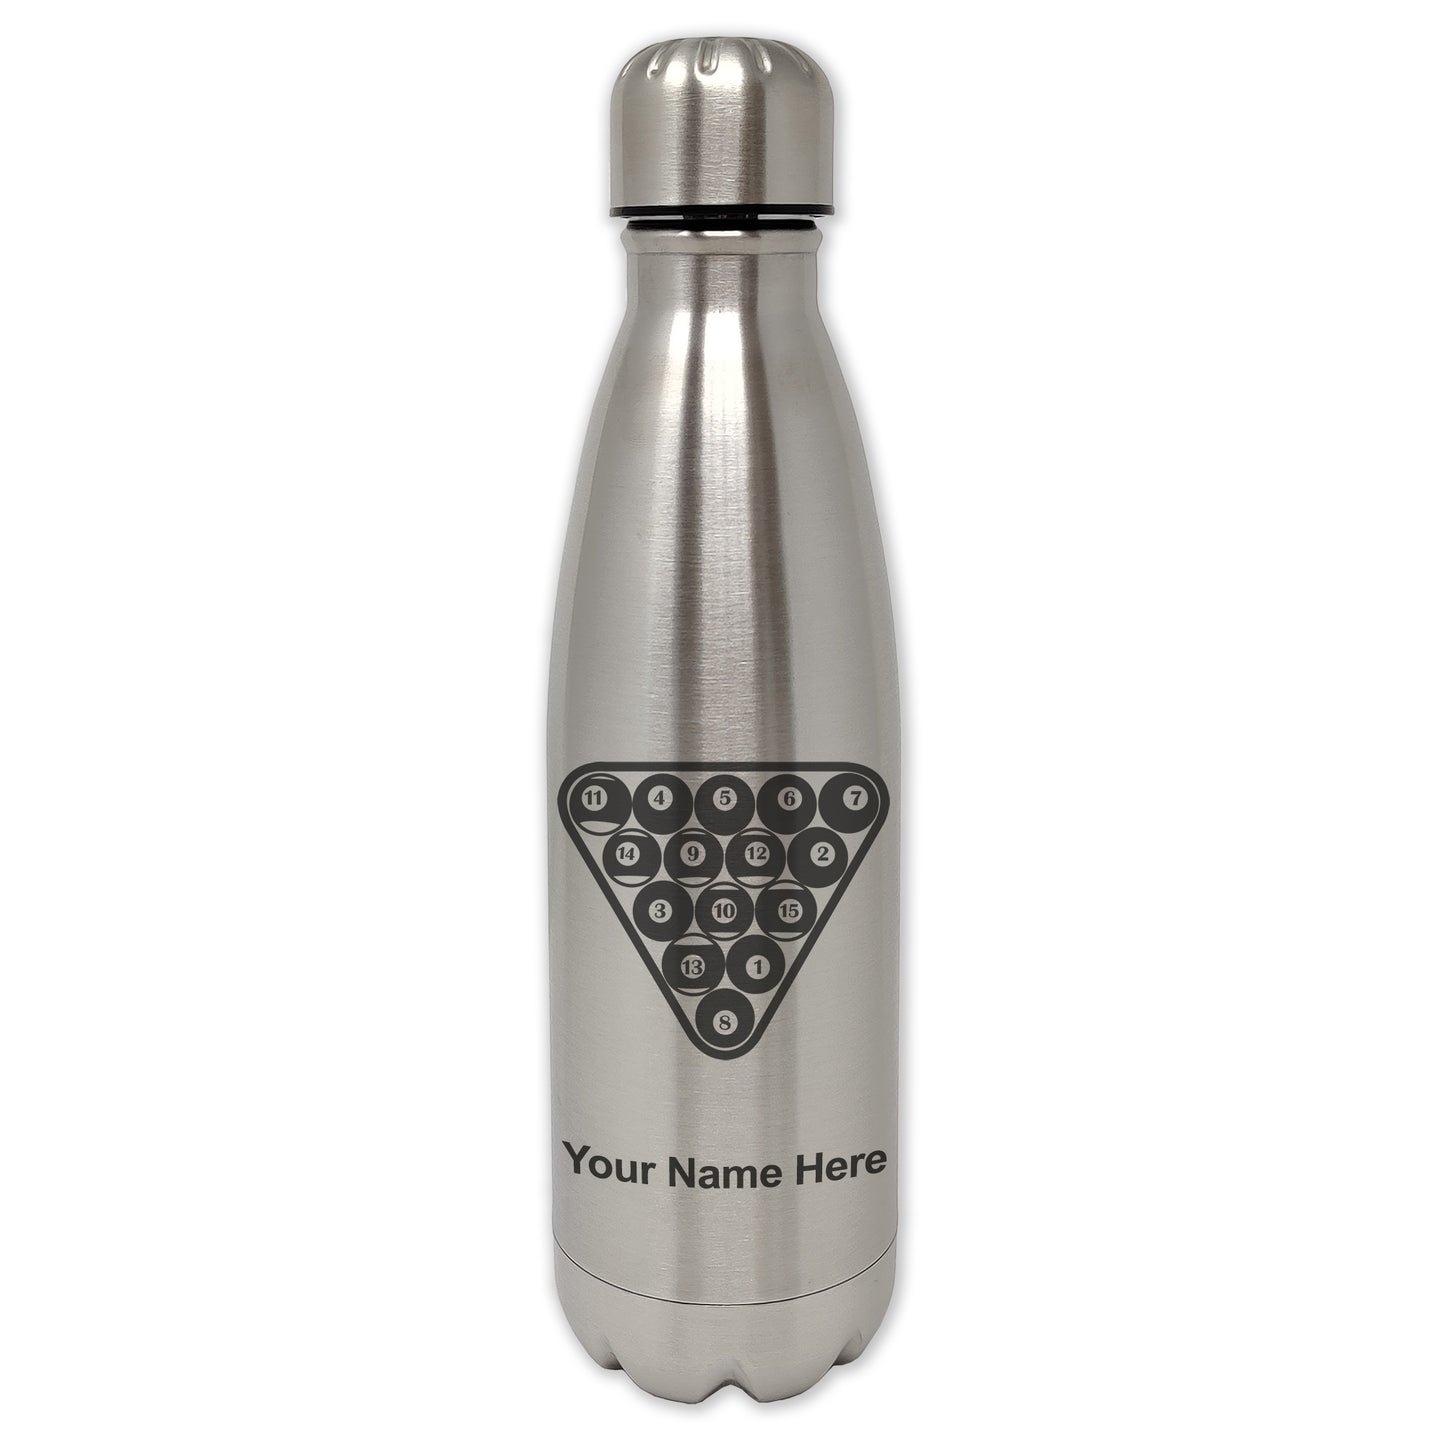 LaserGram Single Wall Water Bottle, Billiard Balls, Personalized Engraving Included